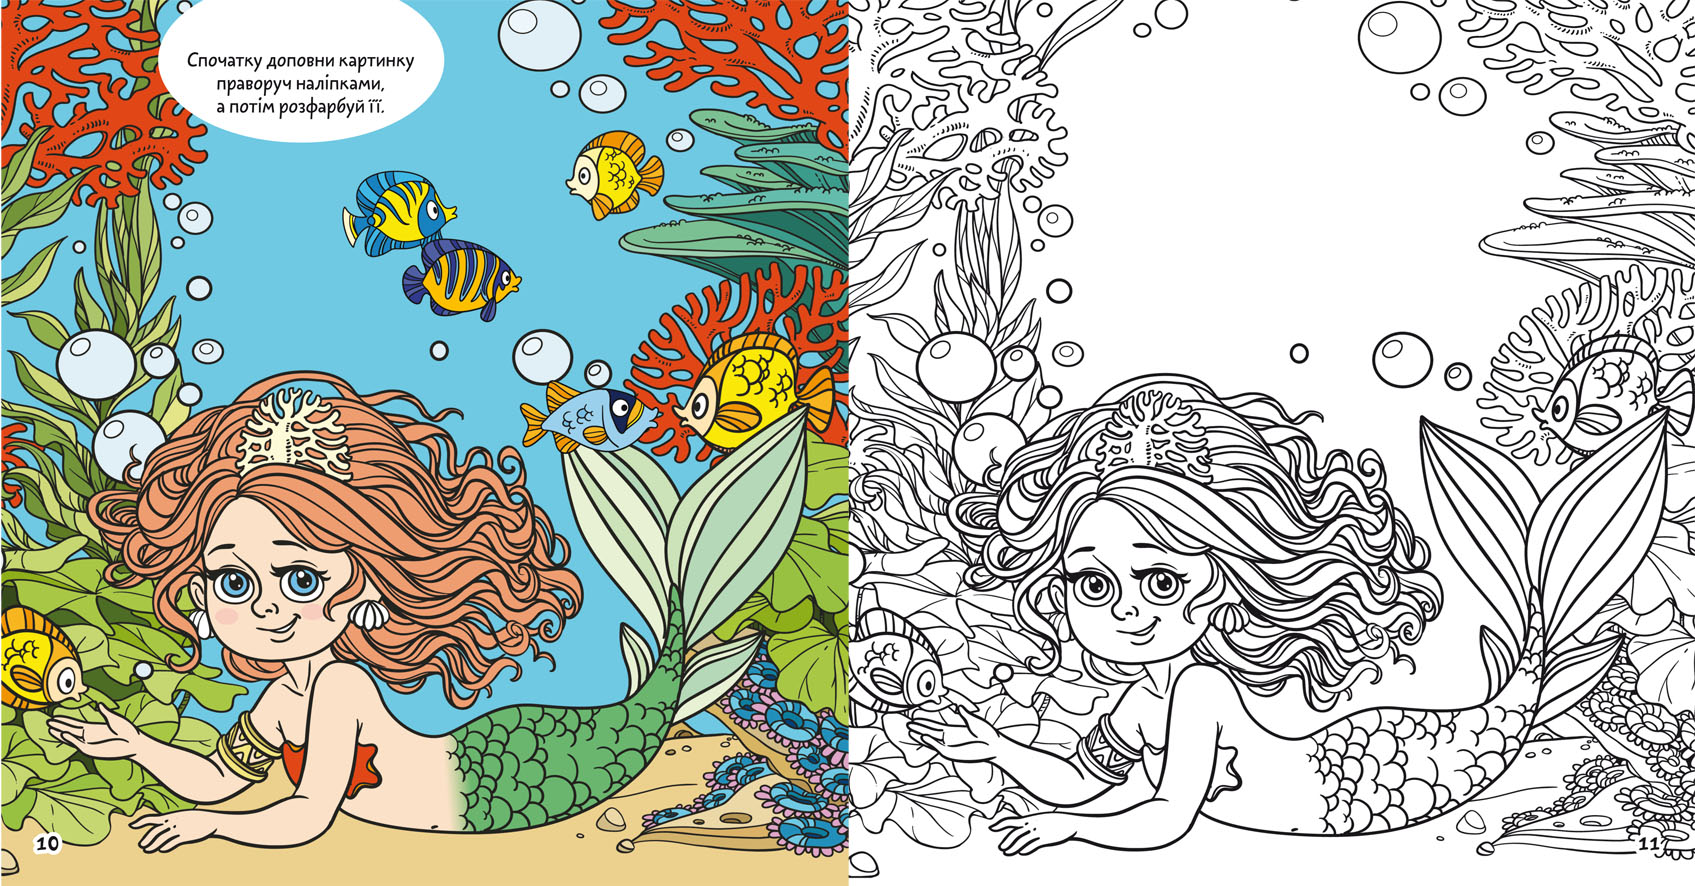 Раскраска Кристал Бук Русалки Морские принцессы, с аликациями и заданиями, 40 наклеек, 16 страниц (F00026155) - фото 3